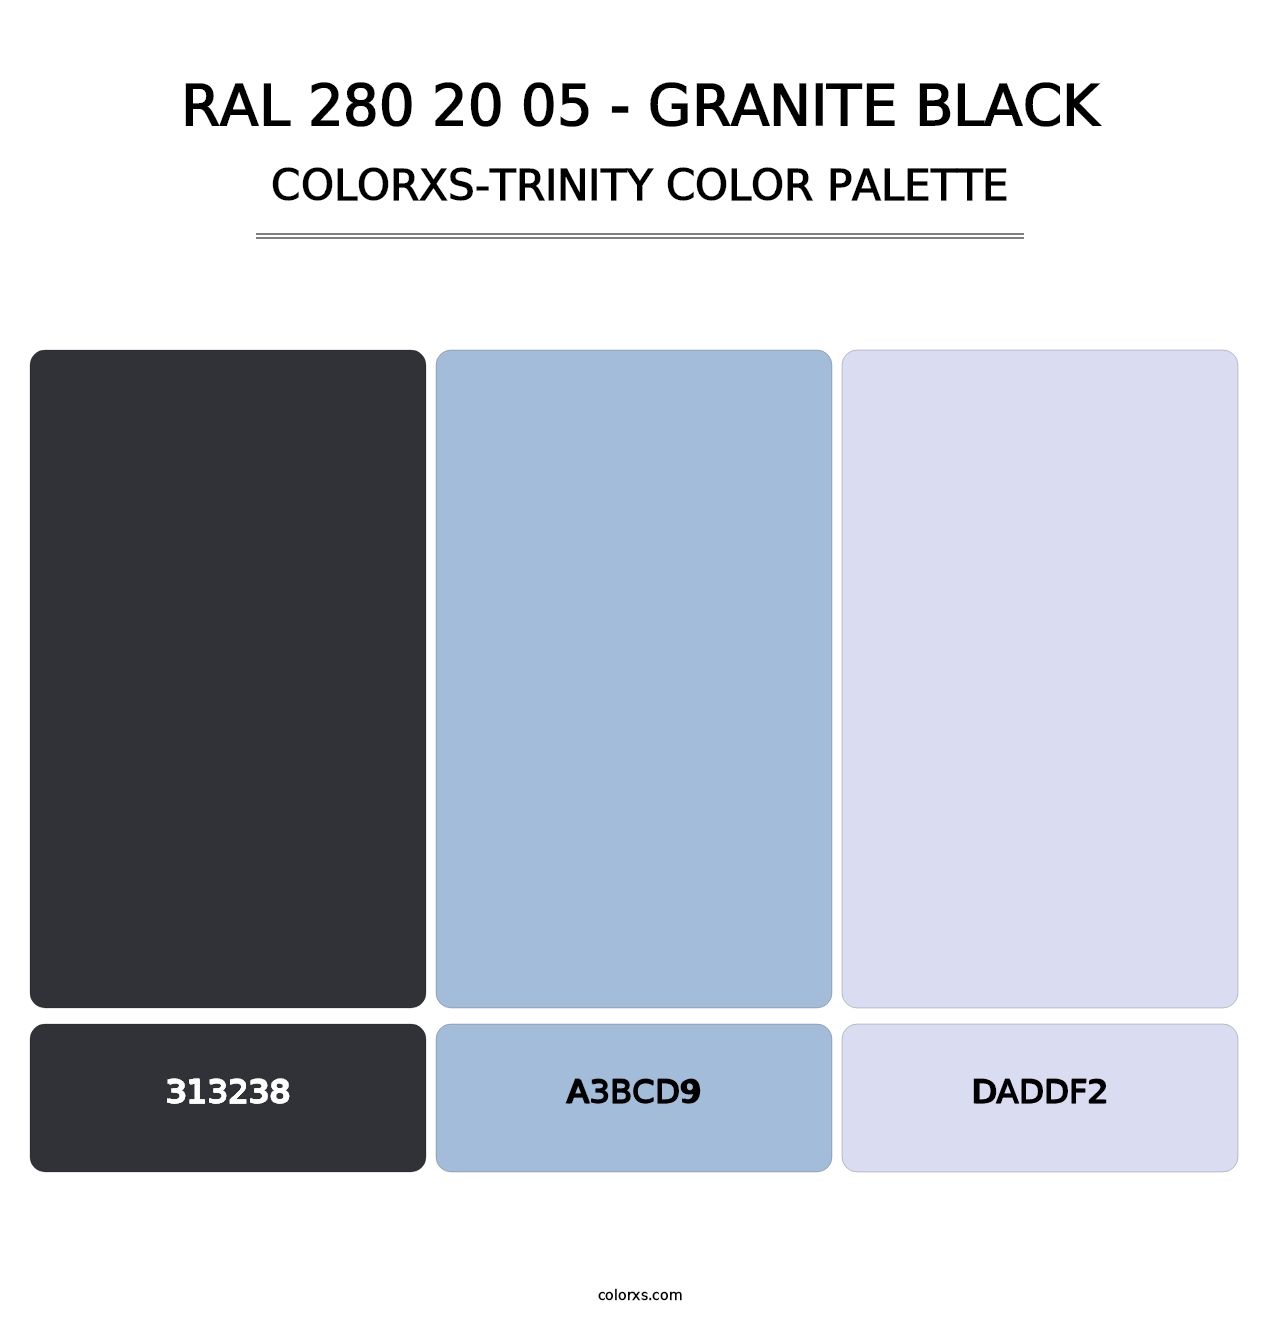 RAL 280 20 05 - Granite Black - Colorxs Trinity Palette